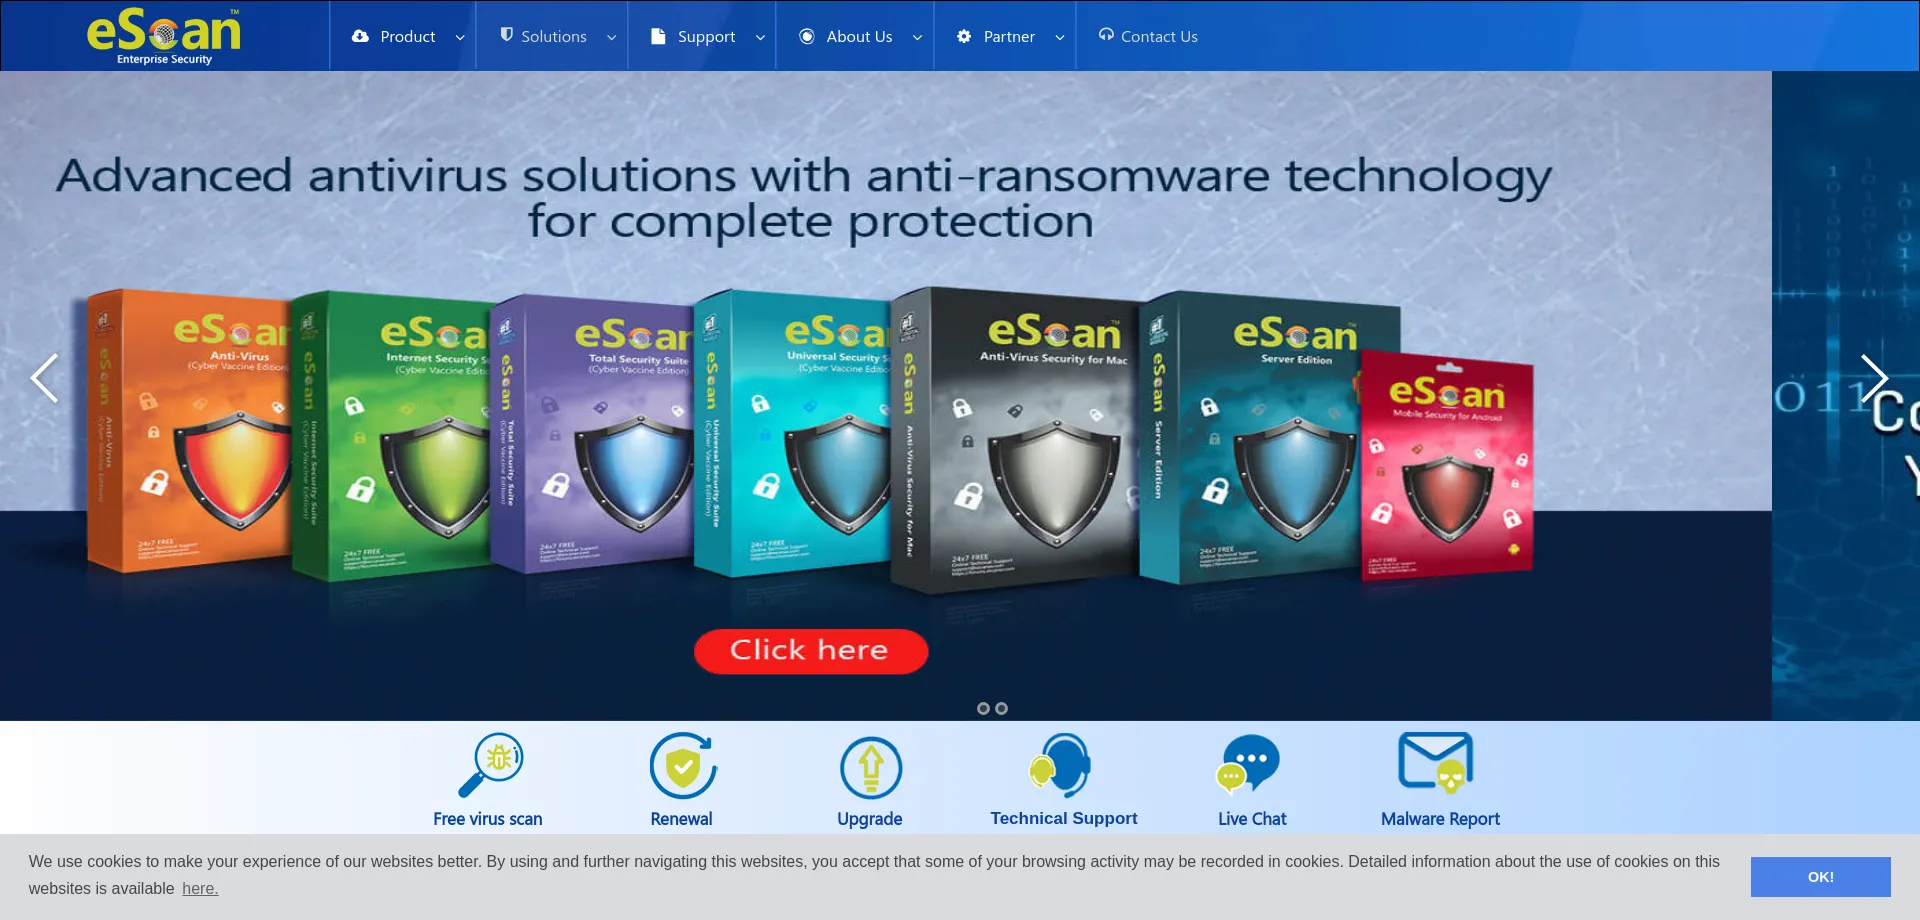 eScan Antivirus Price in Nepal 2017 | eScan Antivirus in Nepal